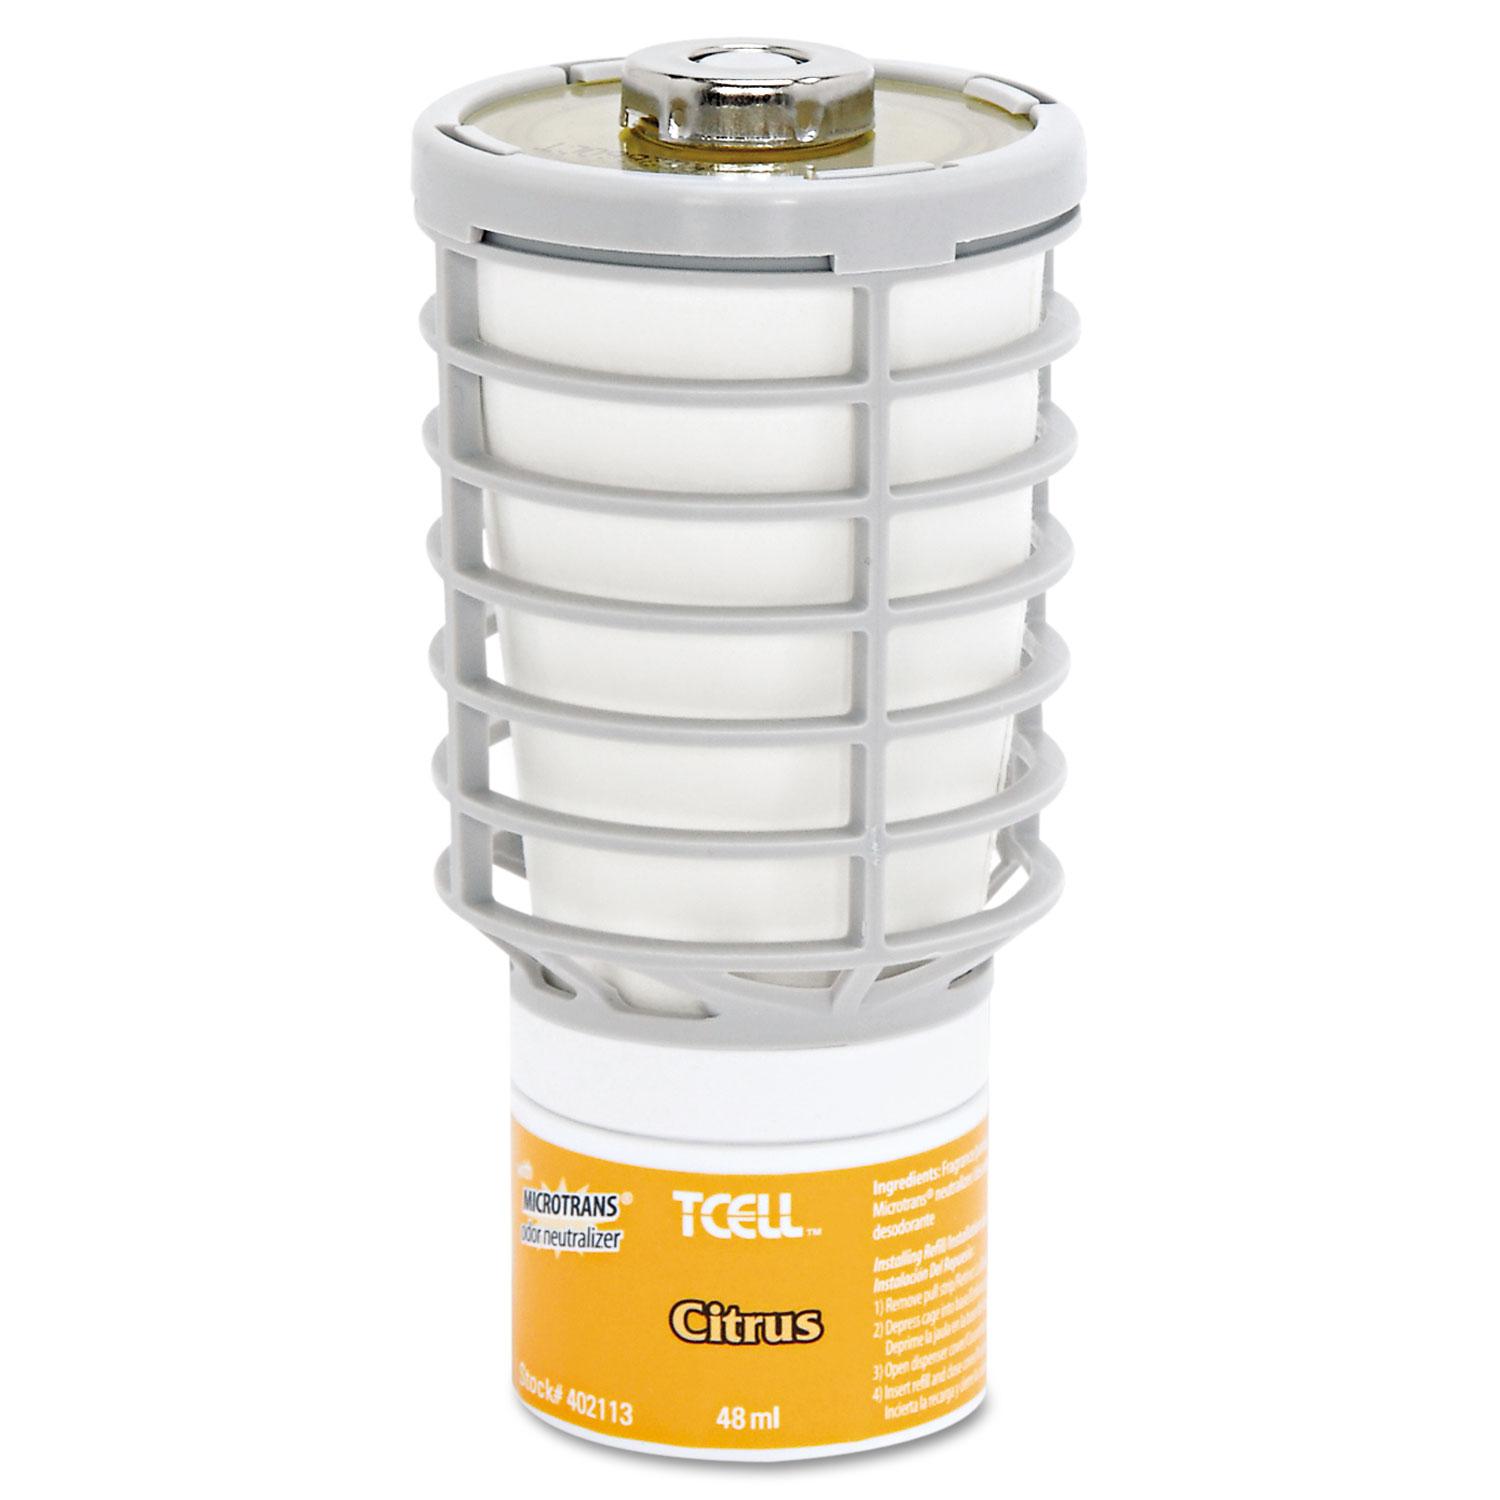 TC TCell Microtrans Odor Neutralizer Refill, Crystal Breeze, 48 mL, 6/Carton